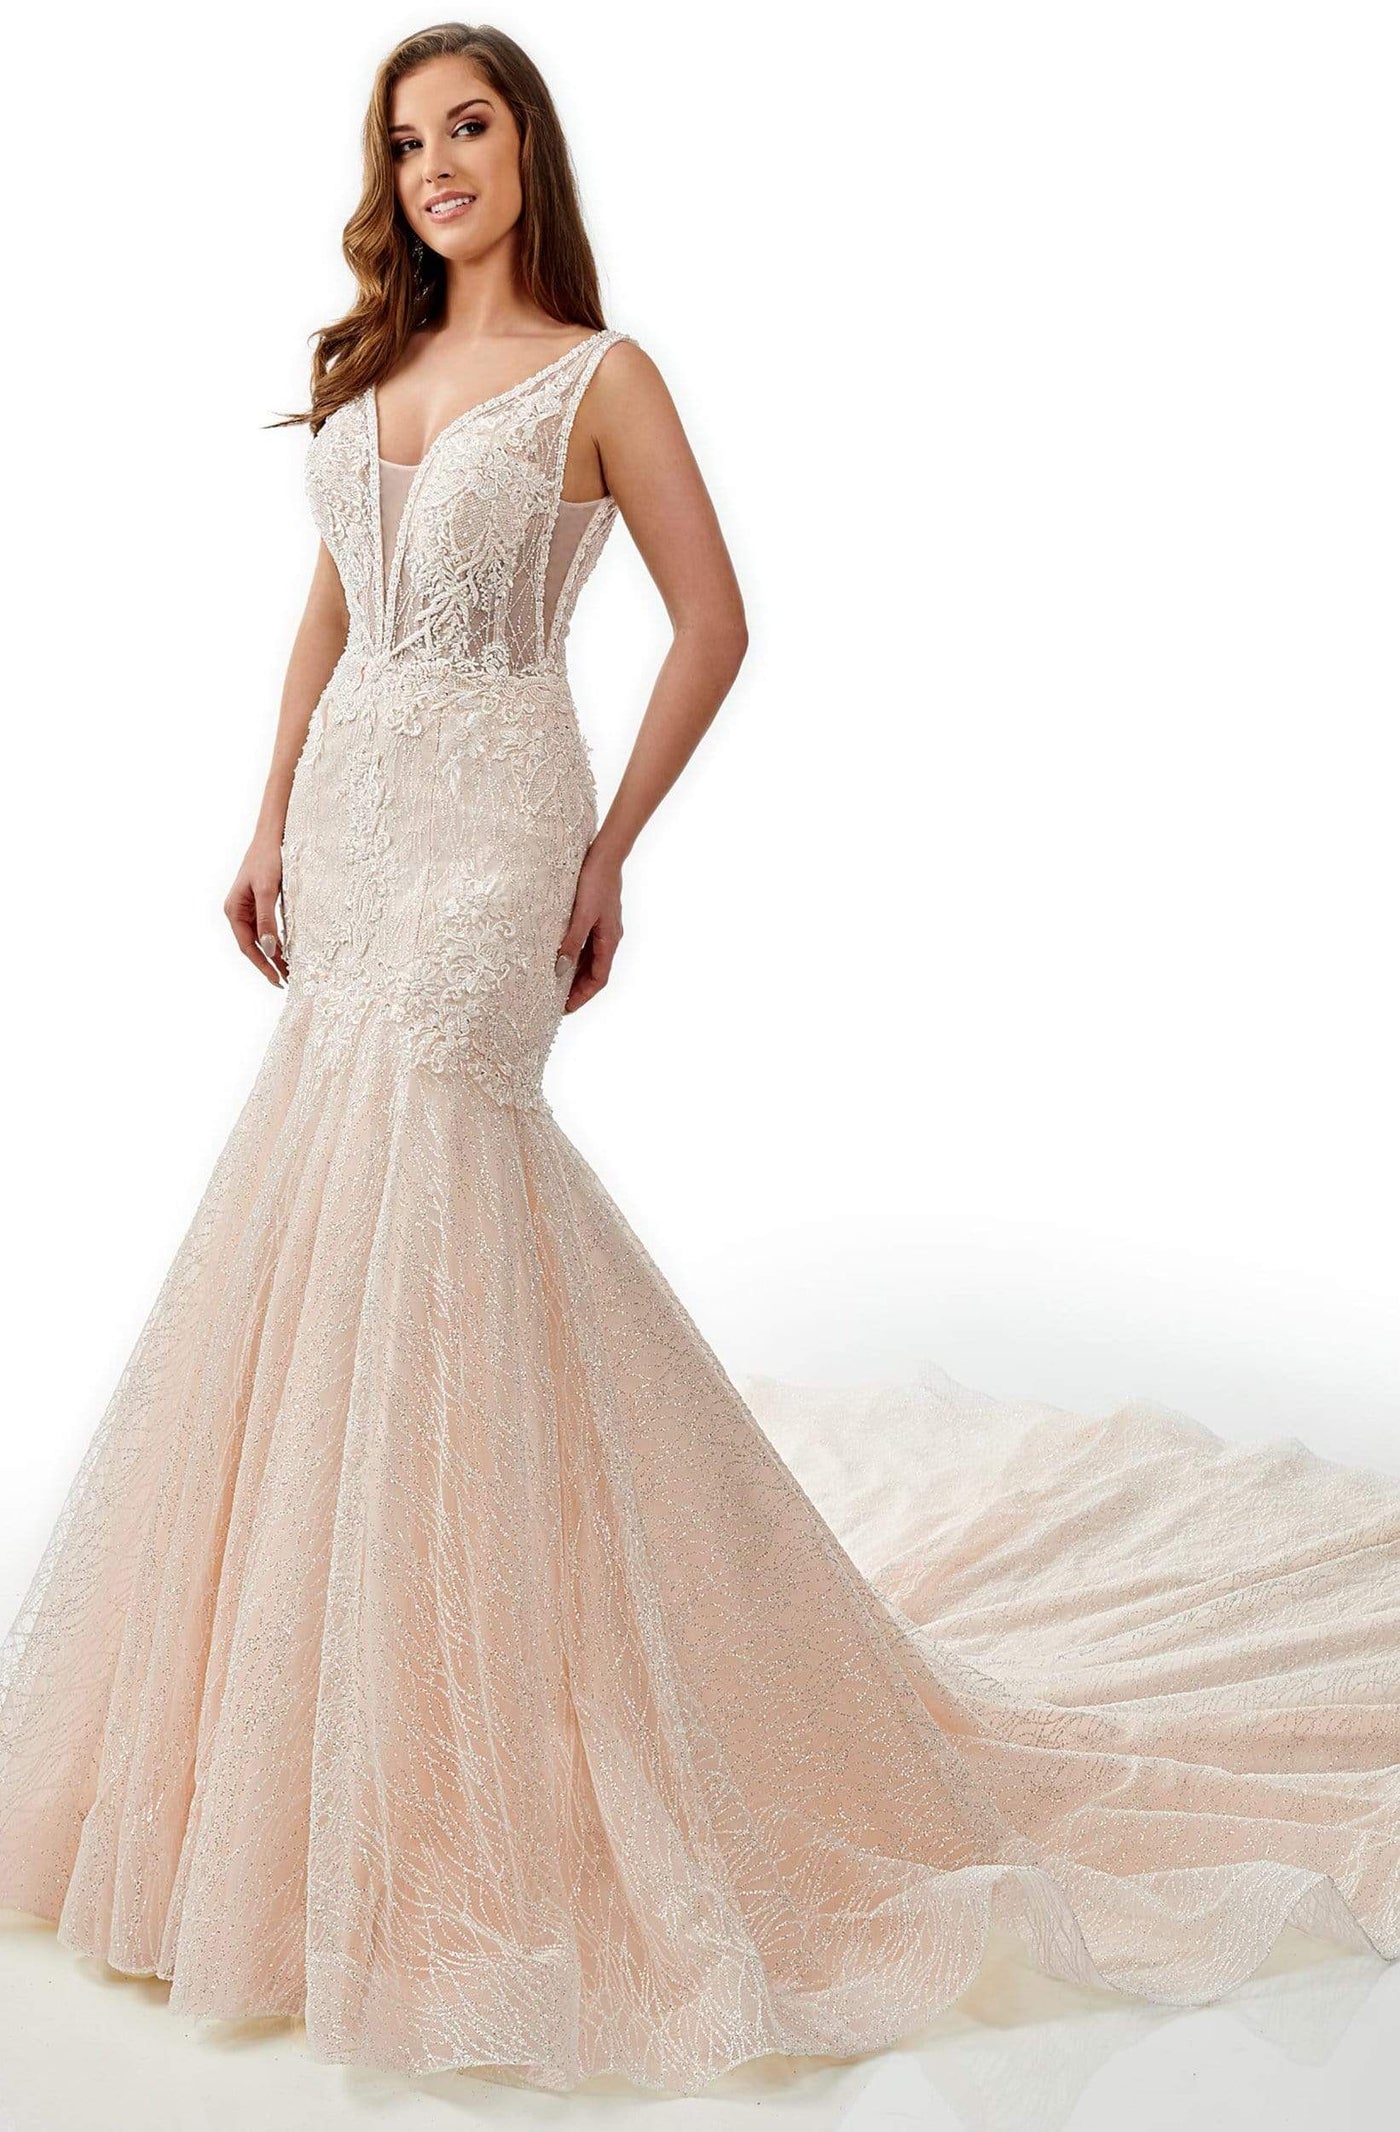 Lo'Adoro Bridal By Rachel Allan - M770 Sheer Deep V Neck Mermaid Gown Wedding Dresses 0 / Ivory Blush